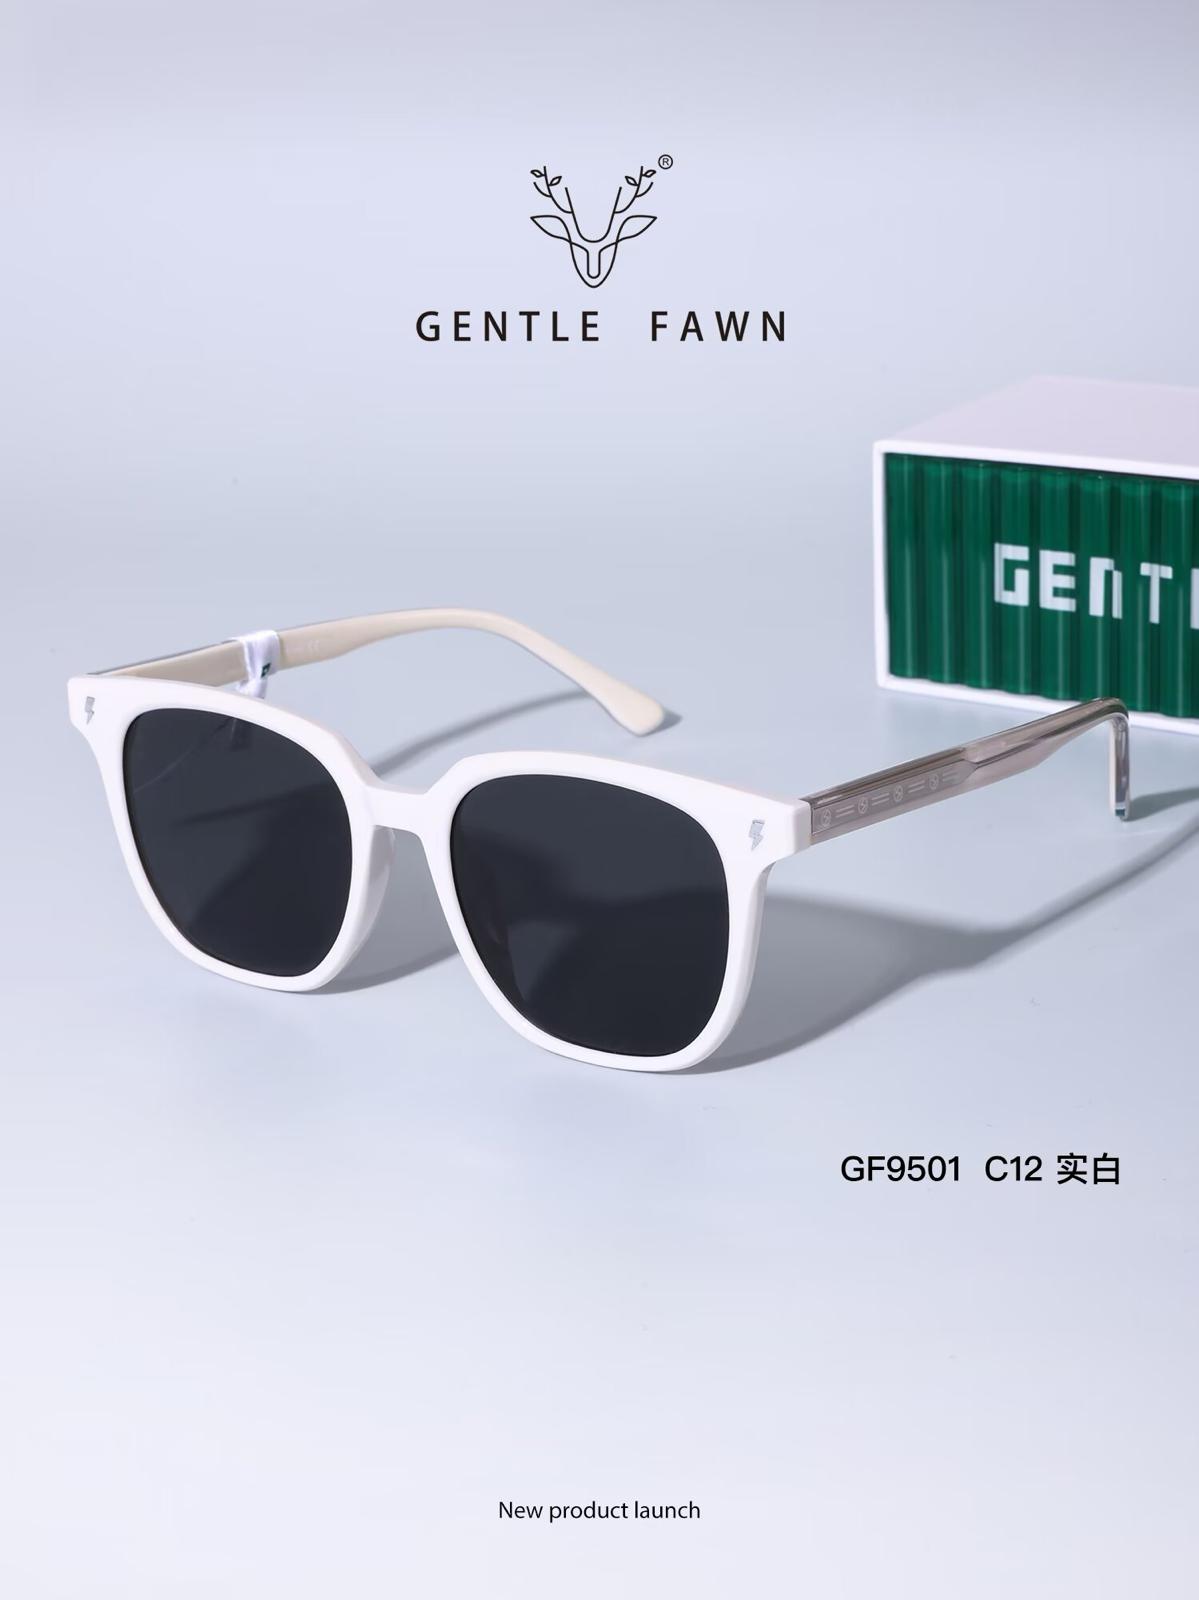 Gentle Fawn Sunglasses Model GZ-GF-9501-C12 (Black & White)